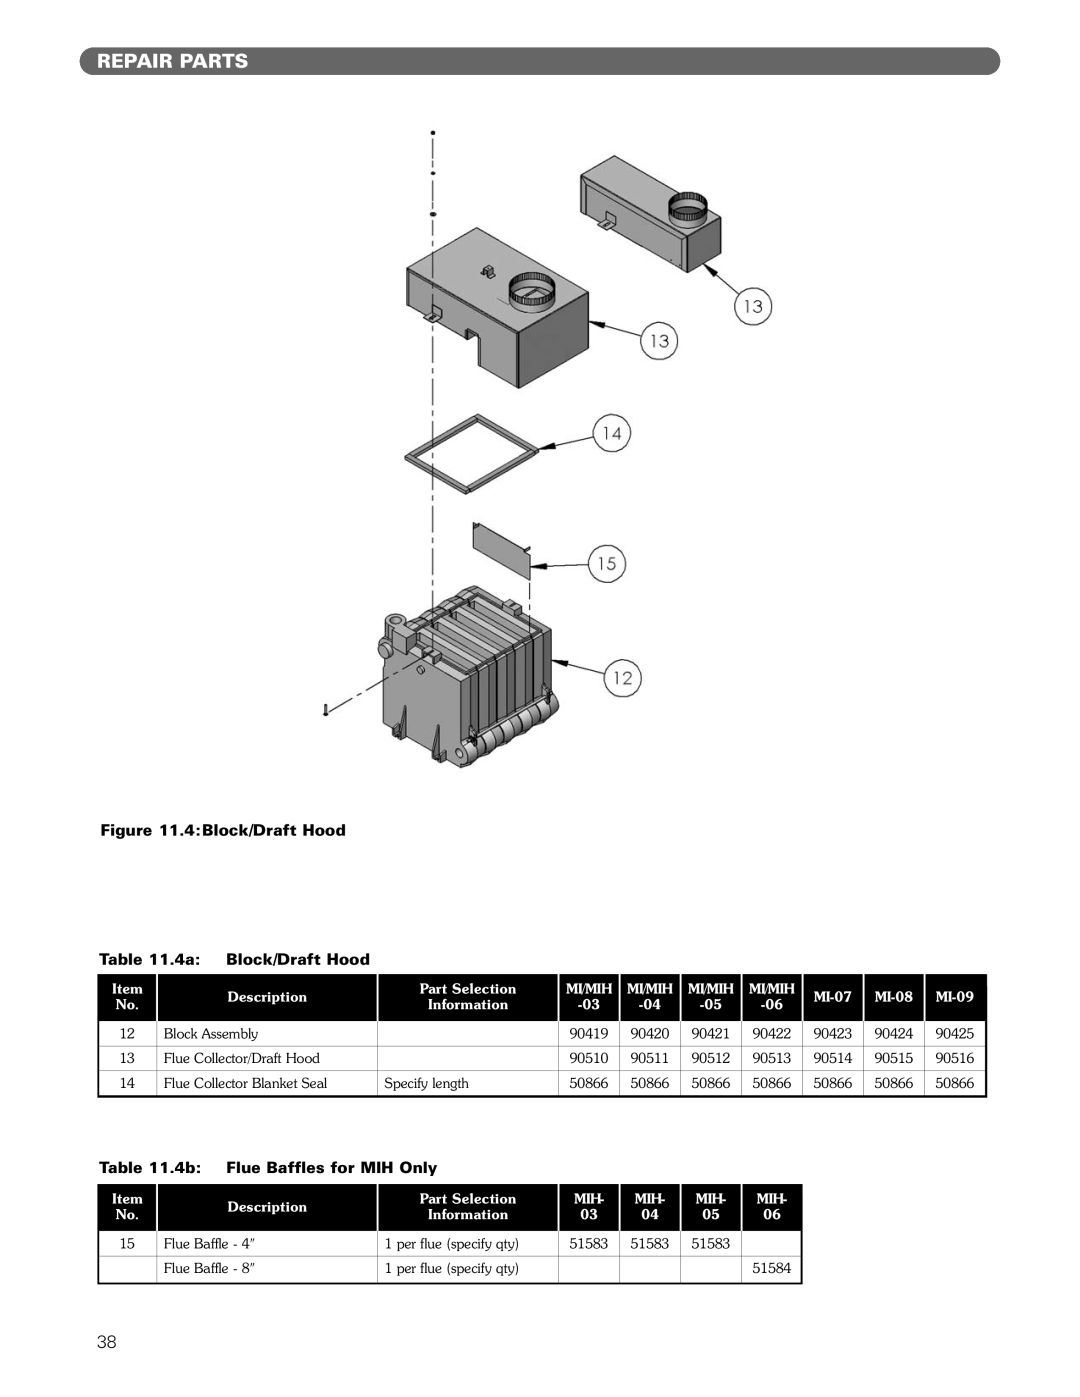 PB Heat MI/MIH series manual Repair Parts, 4 Block/Draft Hood, 4a Block/Draft Hood, 4b Flue Baffles for MIH Only 